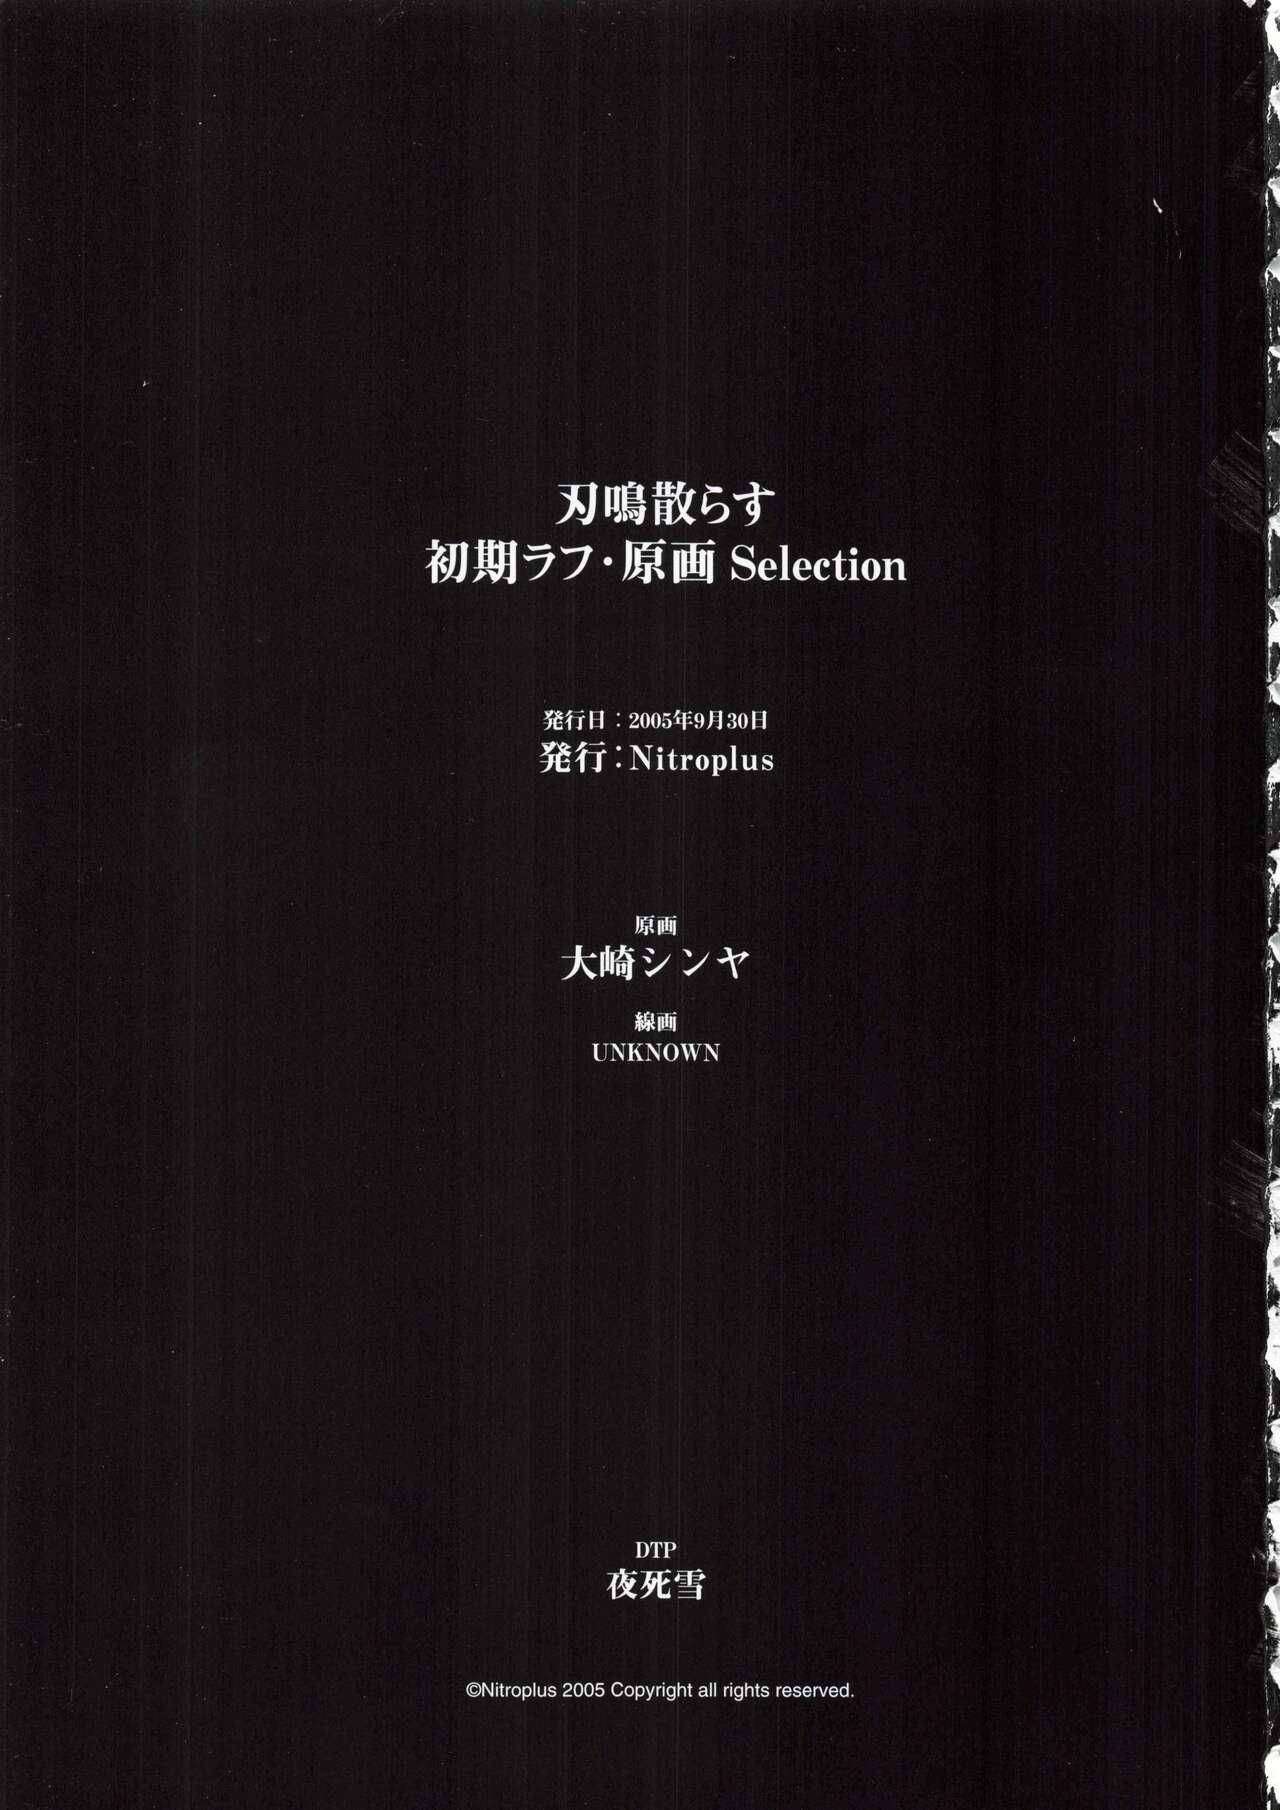 Hanachirasu - Initial Sketches and Unprocessed Illustrations - Selection 49